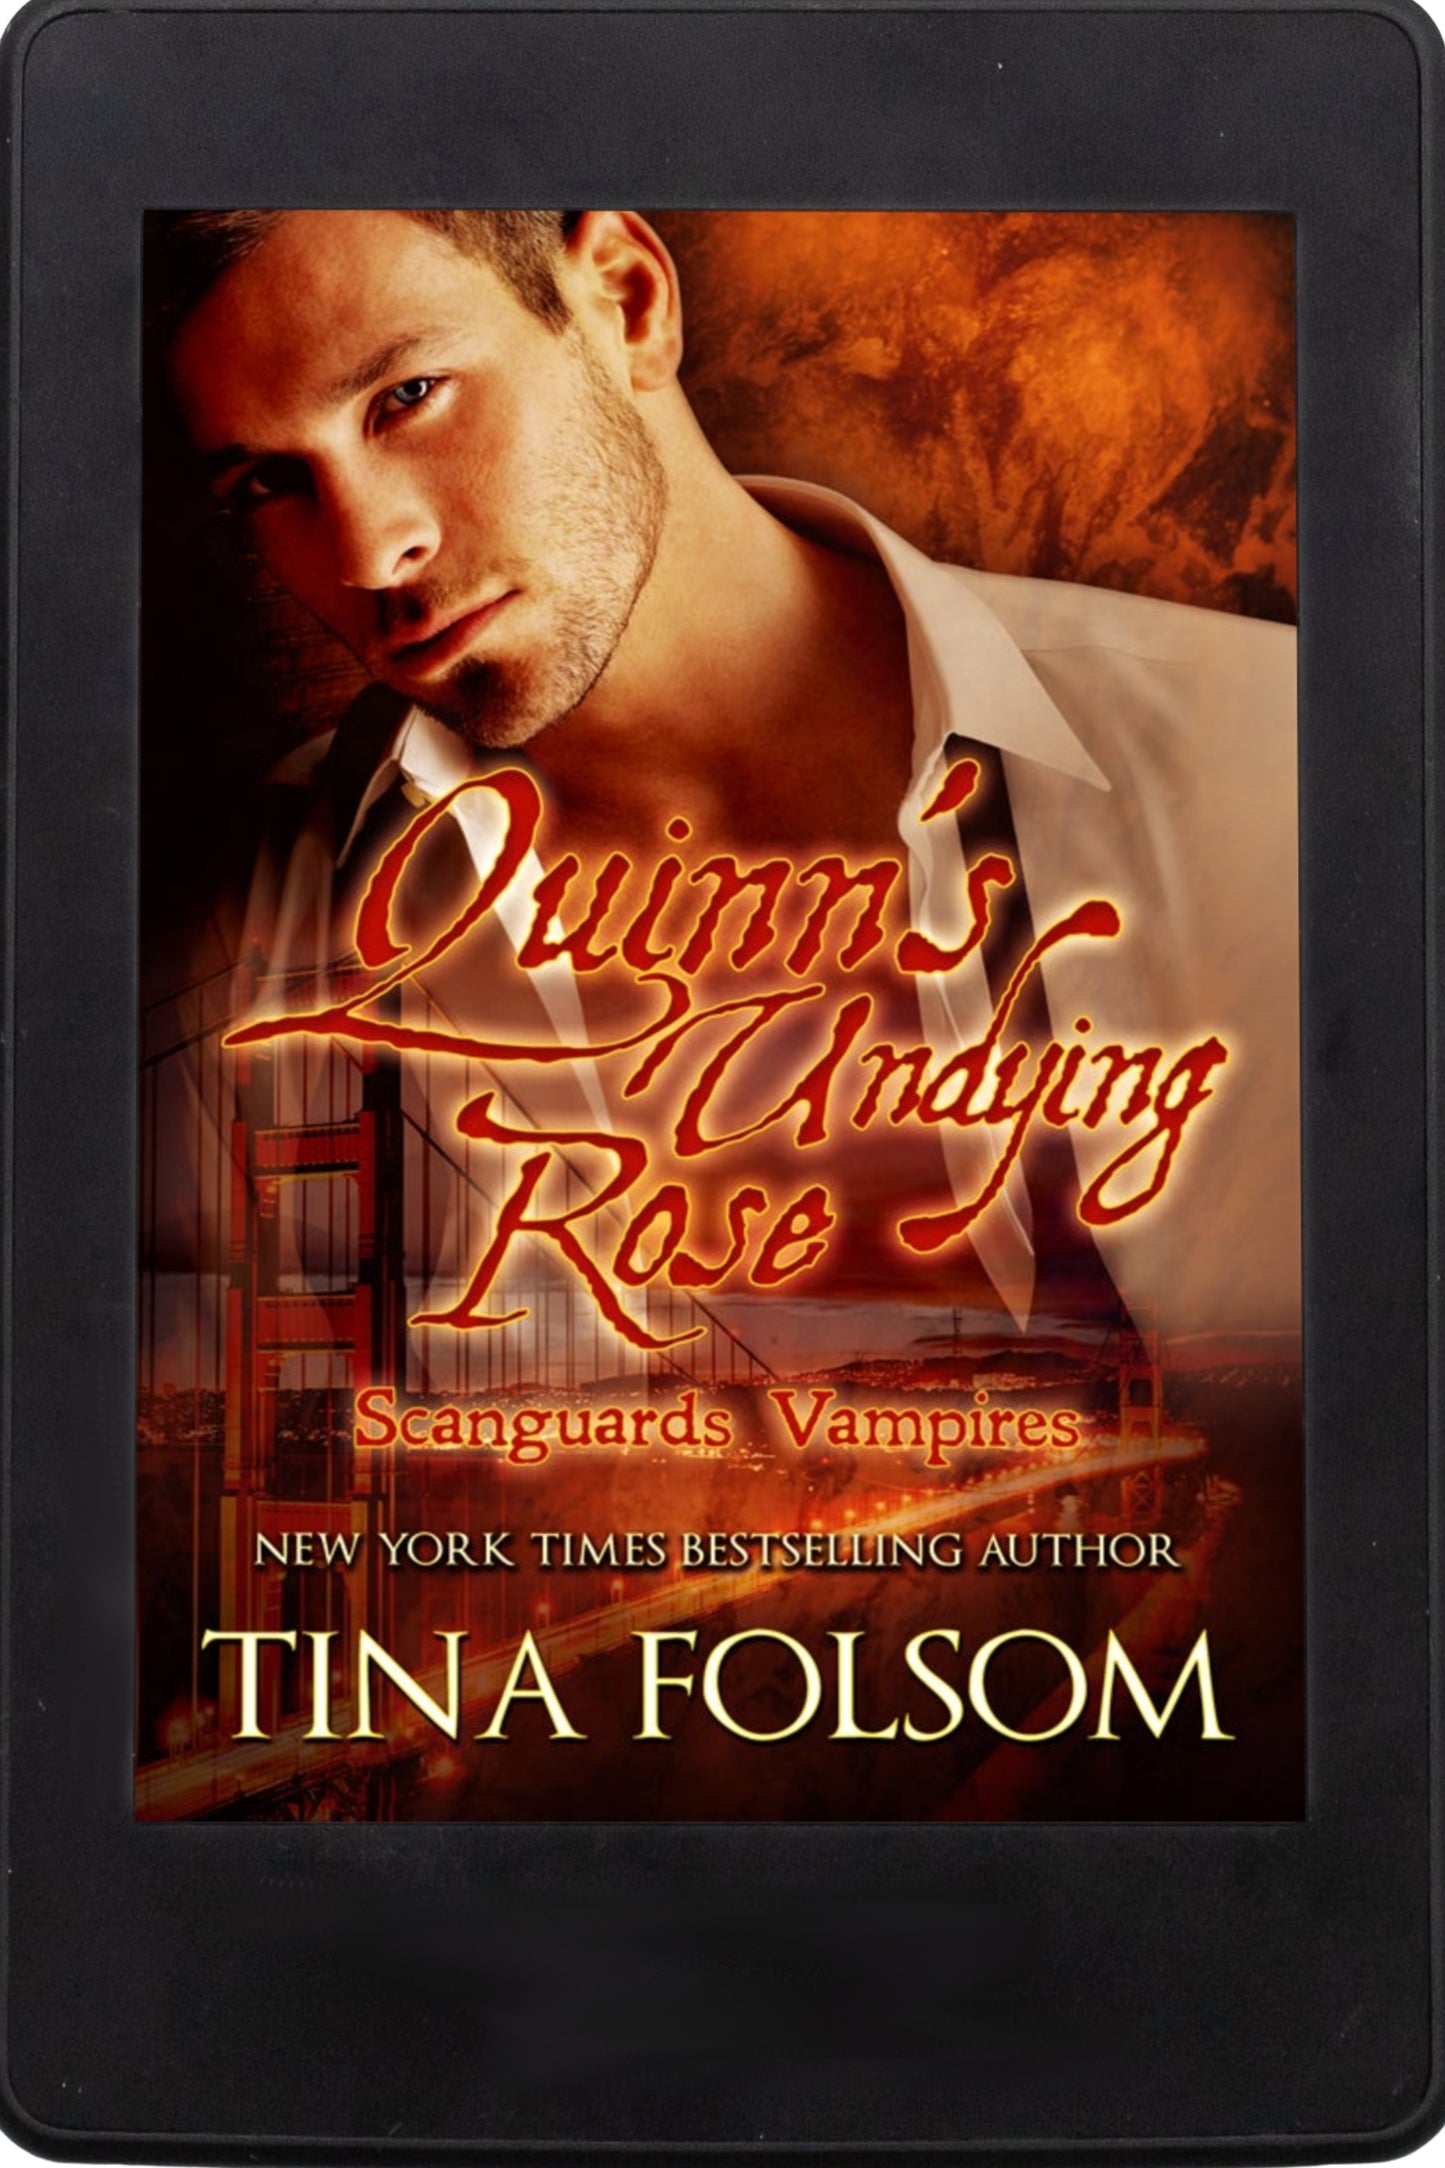 Quinn's undying rose scanguards vampires ebook